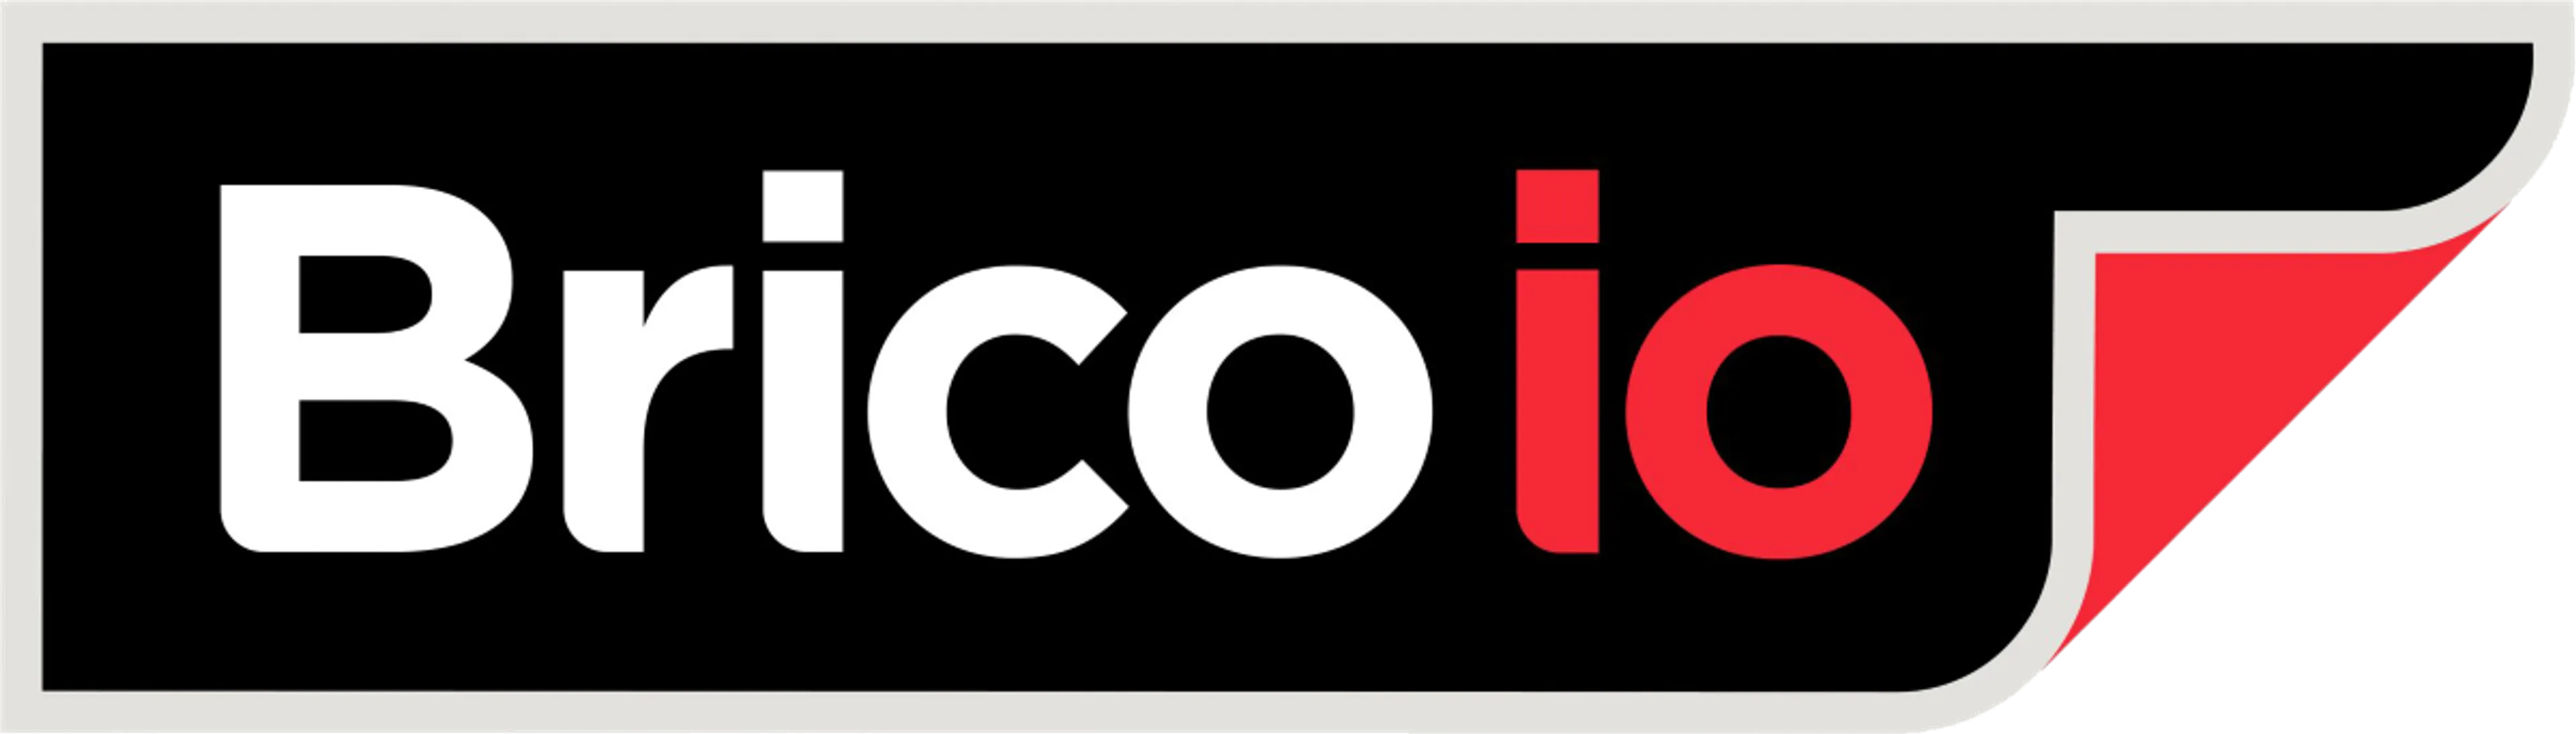 BRICO IO logo